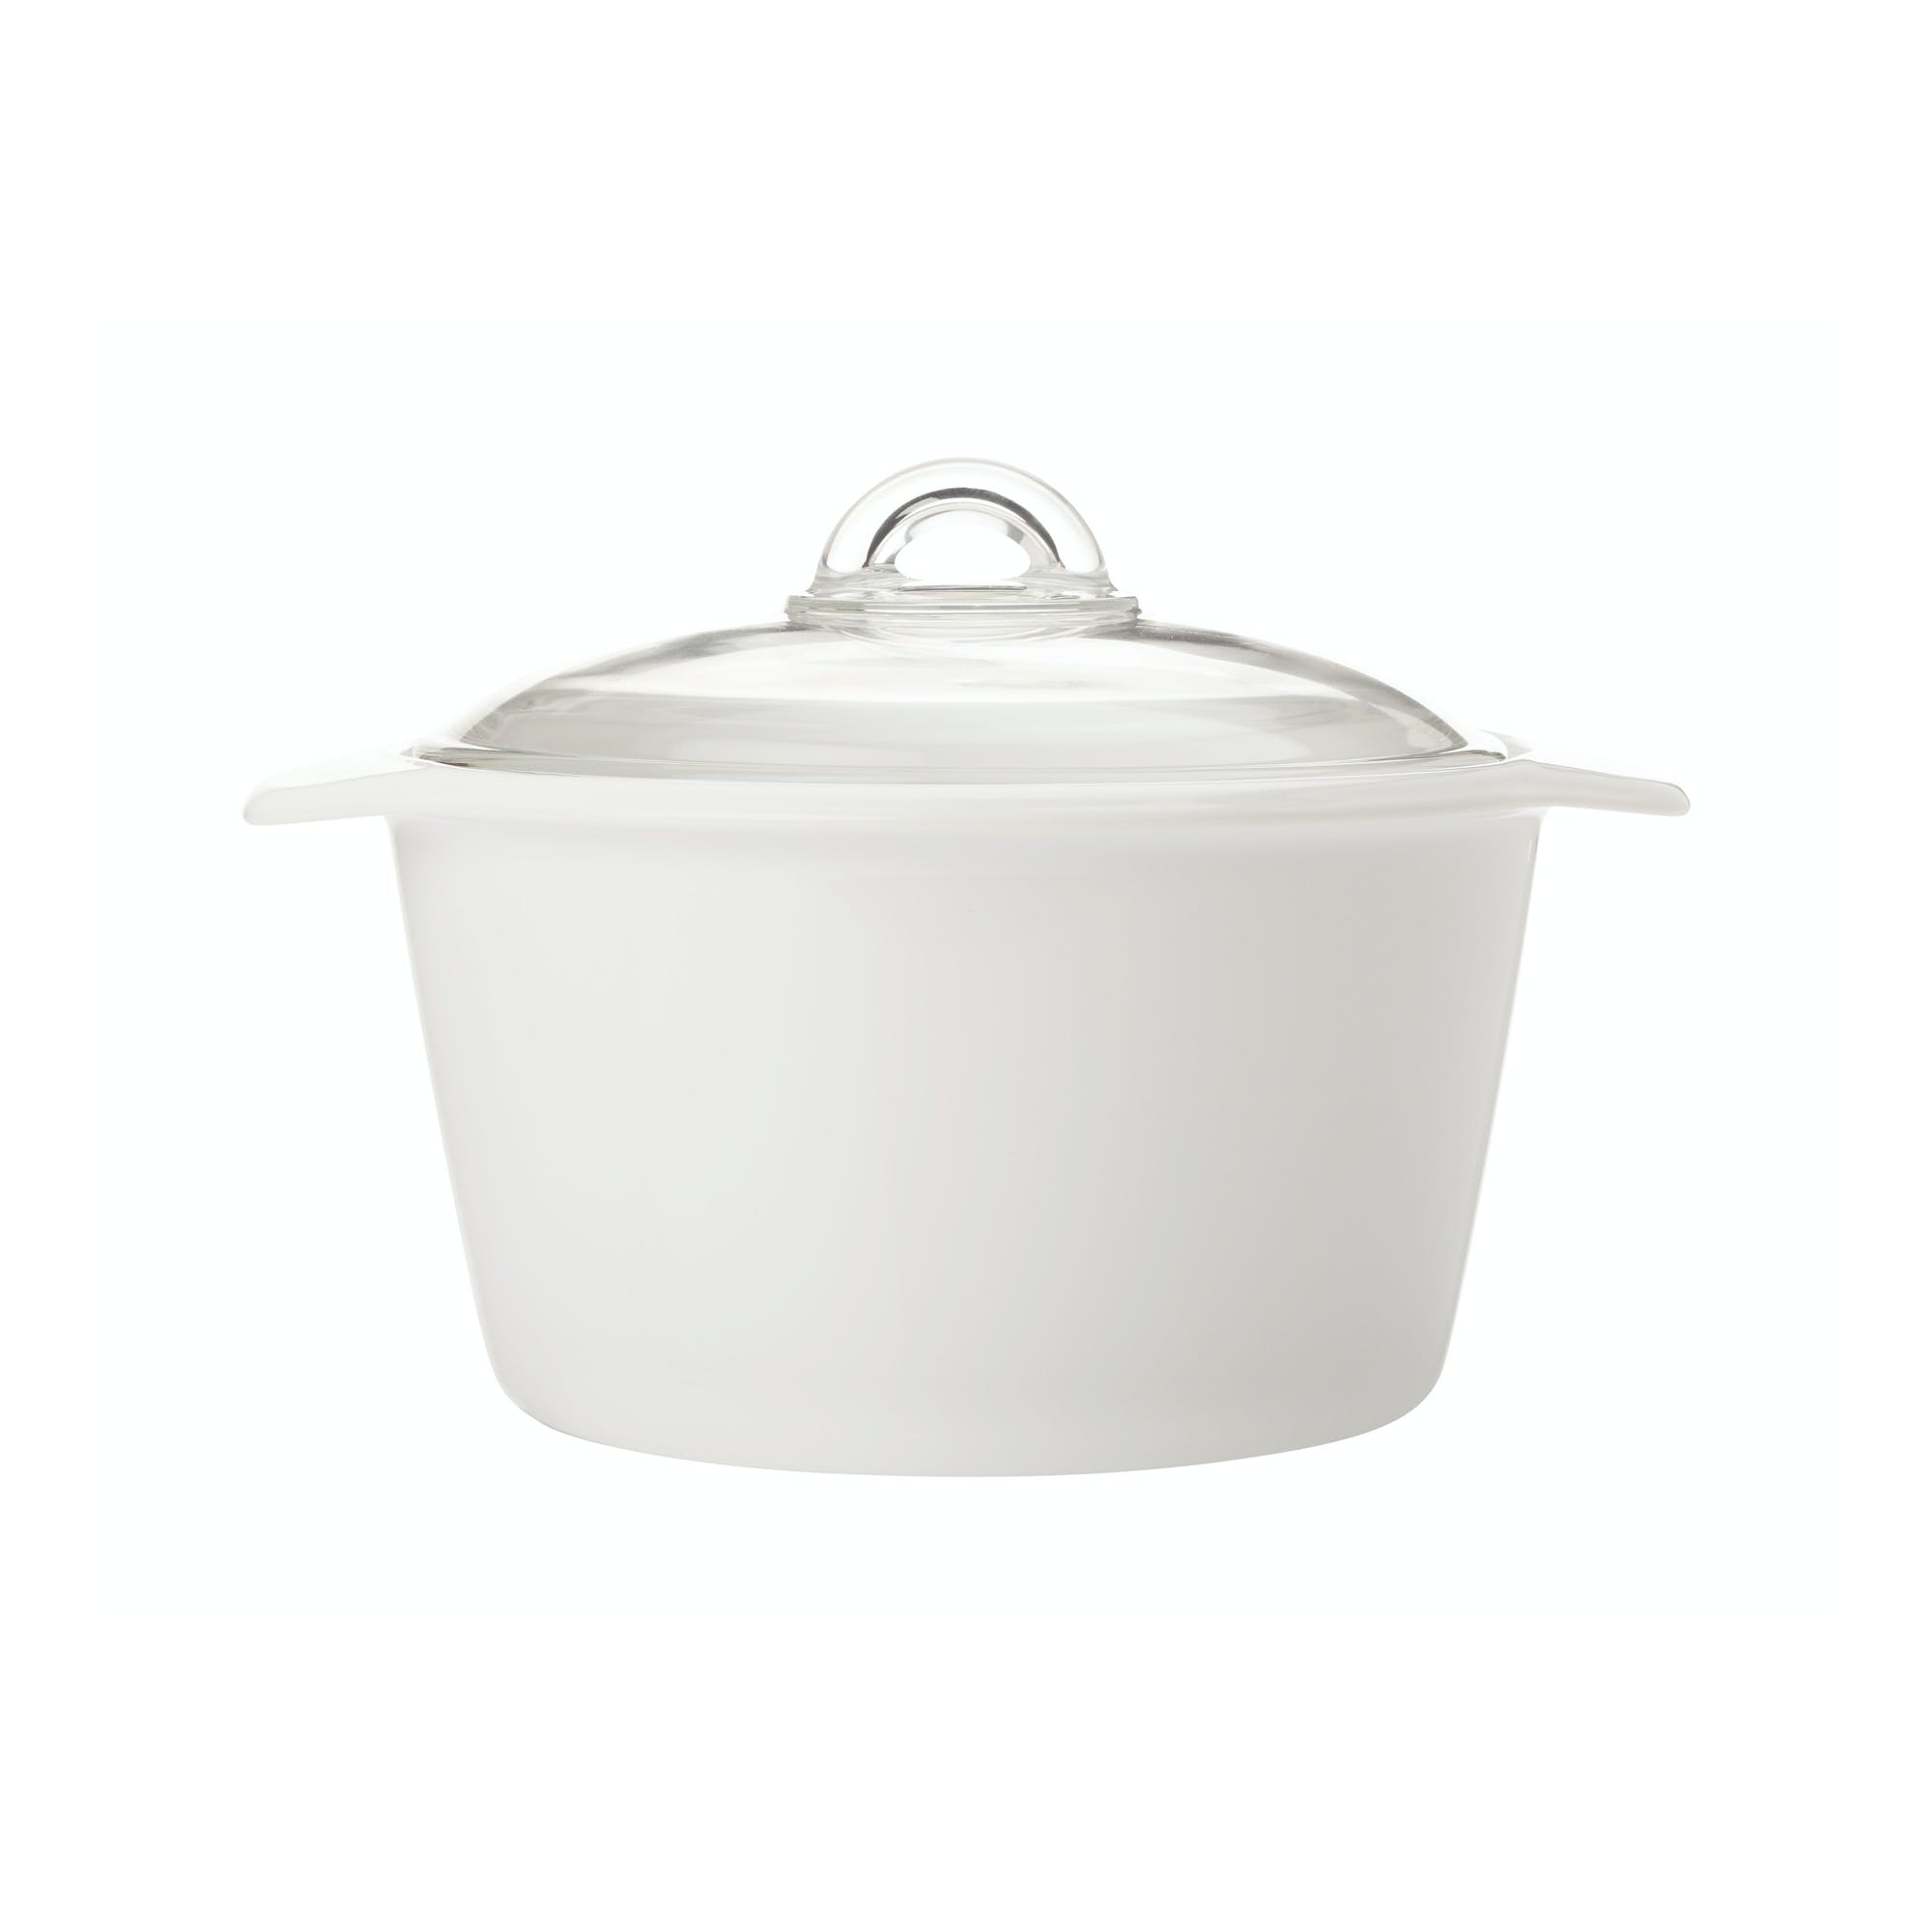 Maxwell & Williams Vitromax 5 Litre Round Casserole Dish with Lid White - The Cooks Cupboard Ltd